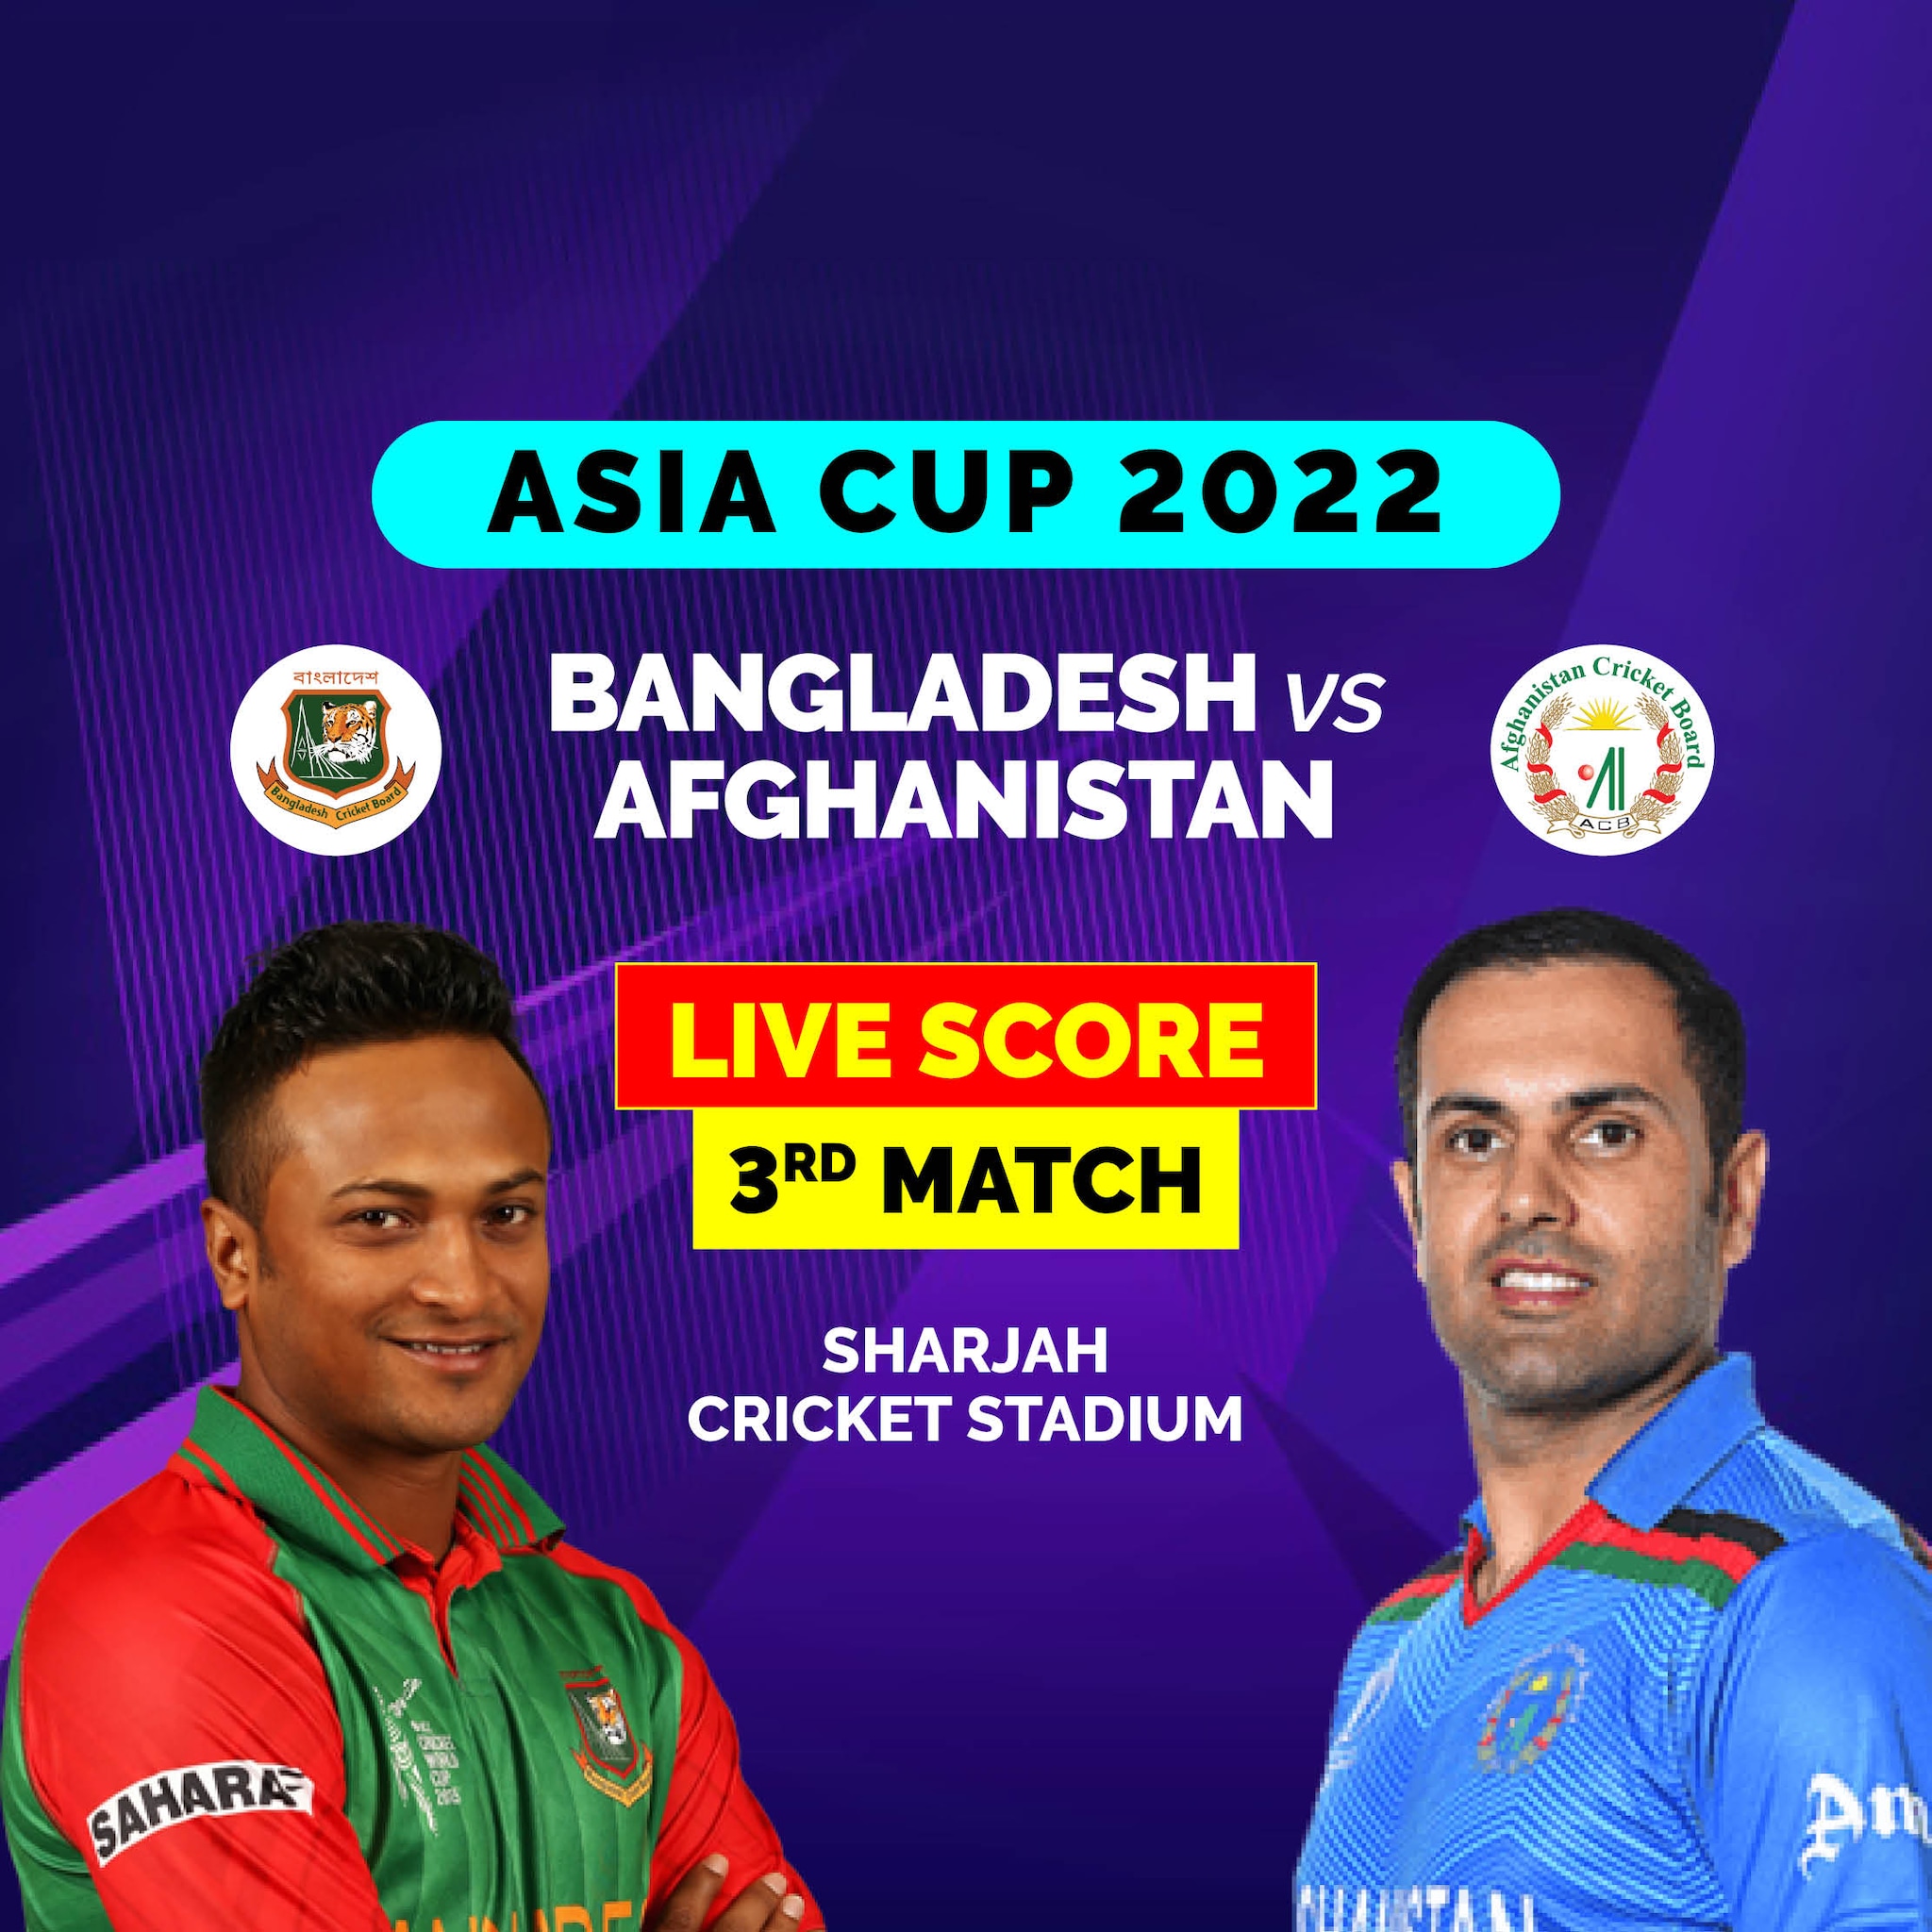 Bangladesh Vs Afghanistan T20 Match Score tizen smartwatch 163zhf